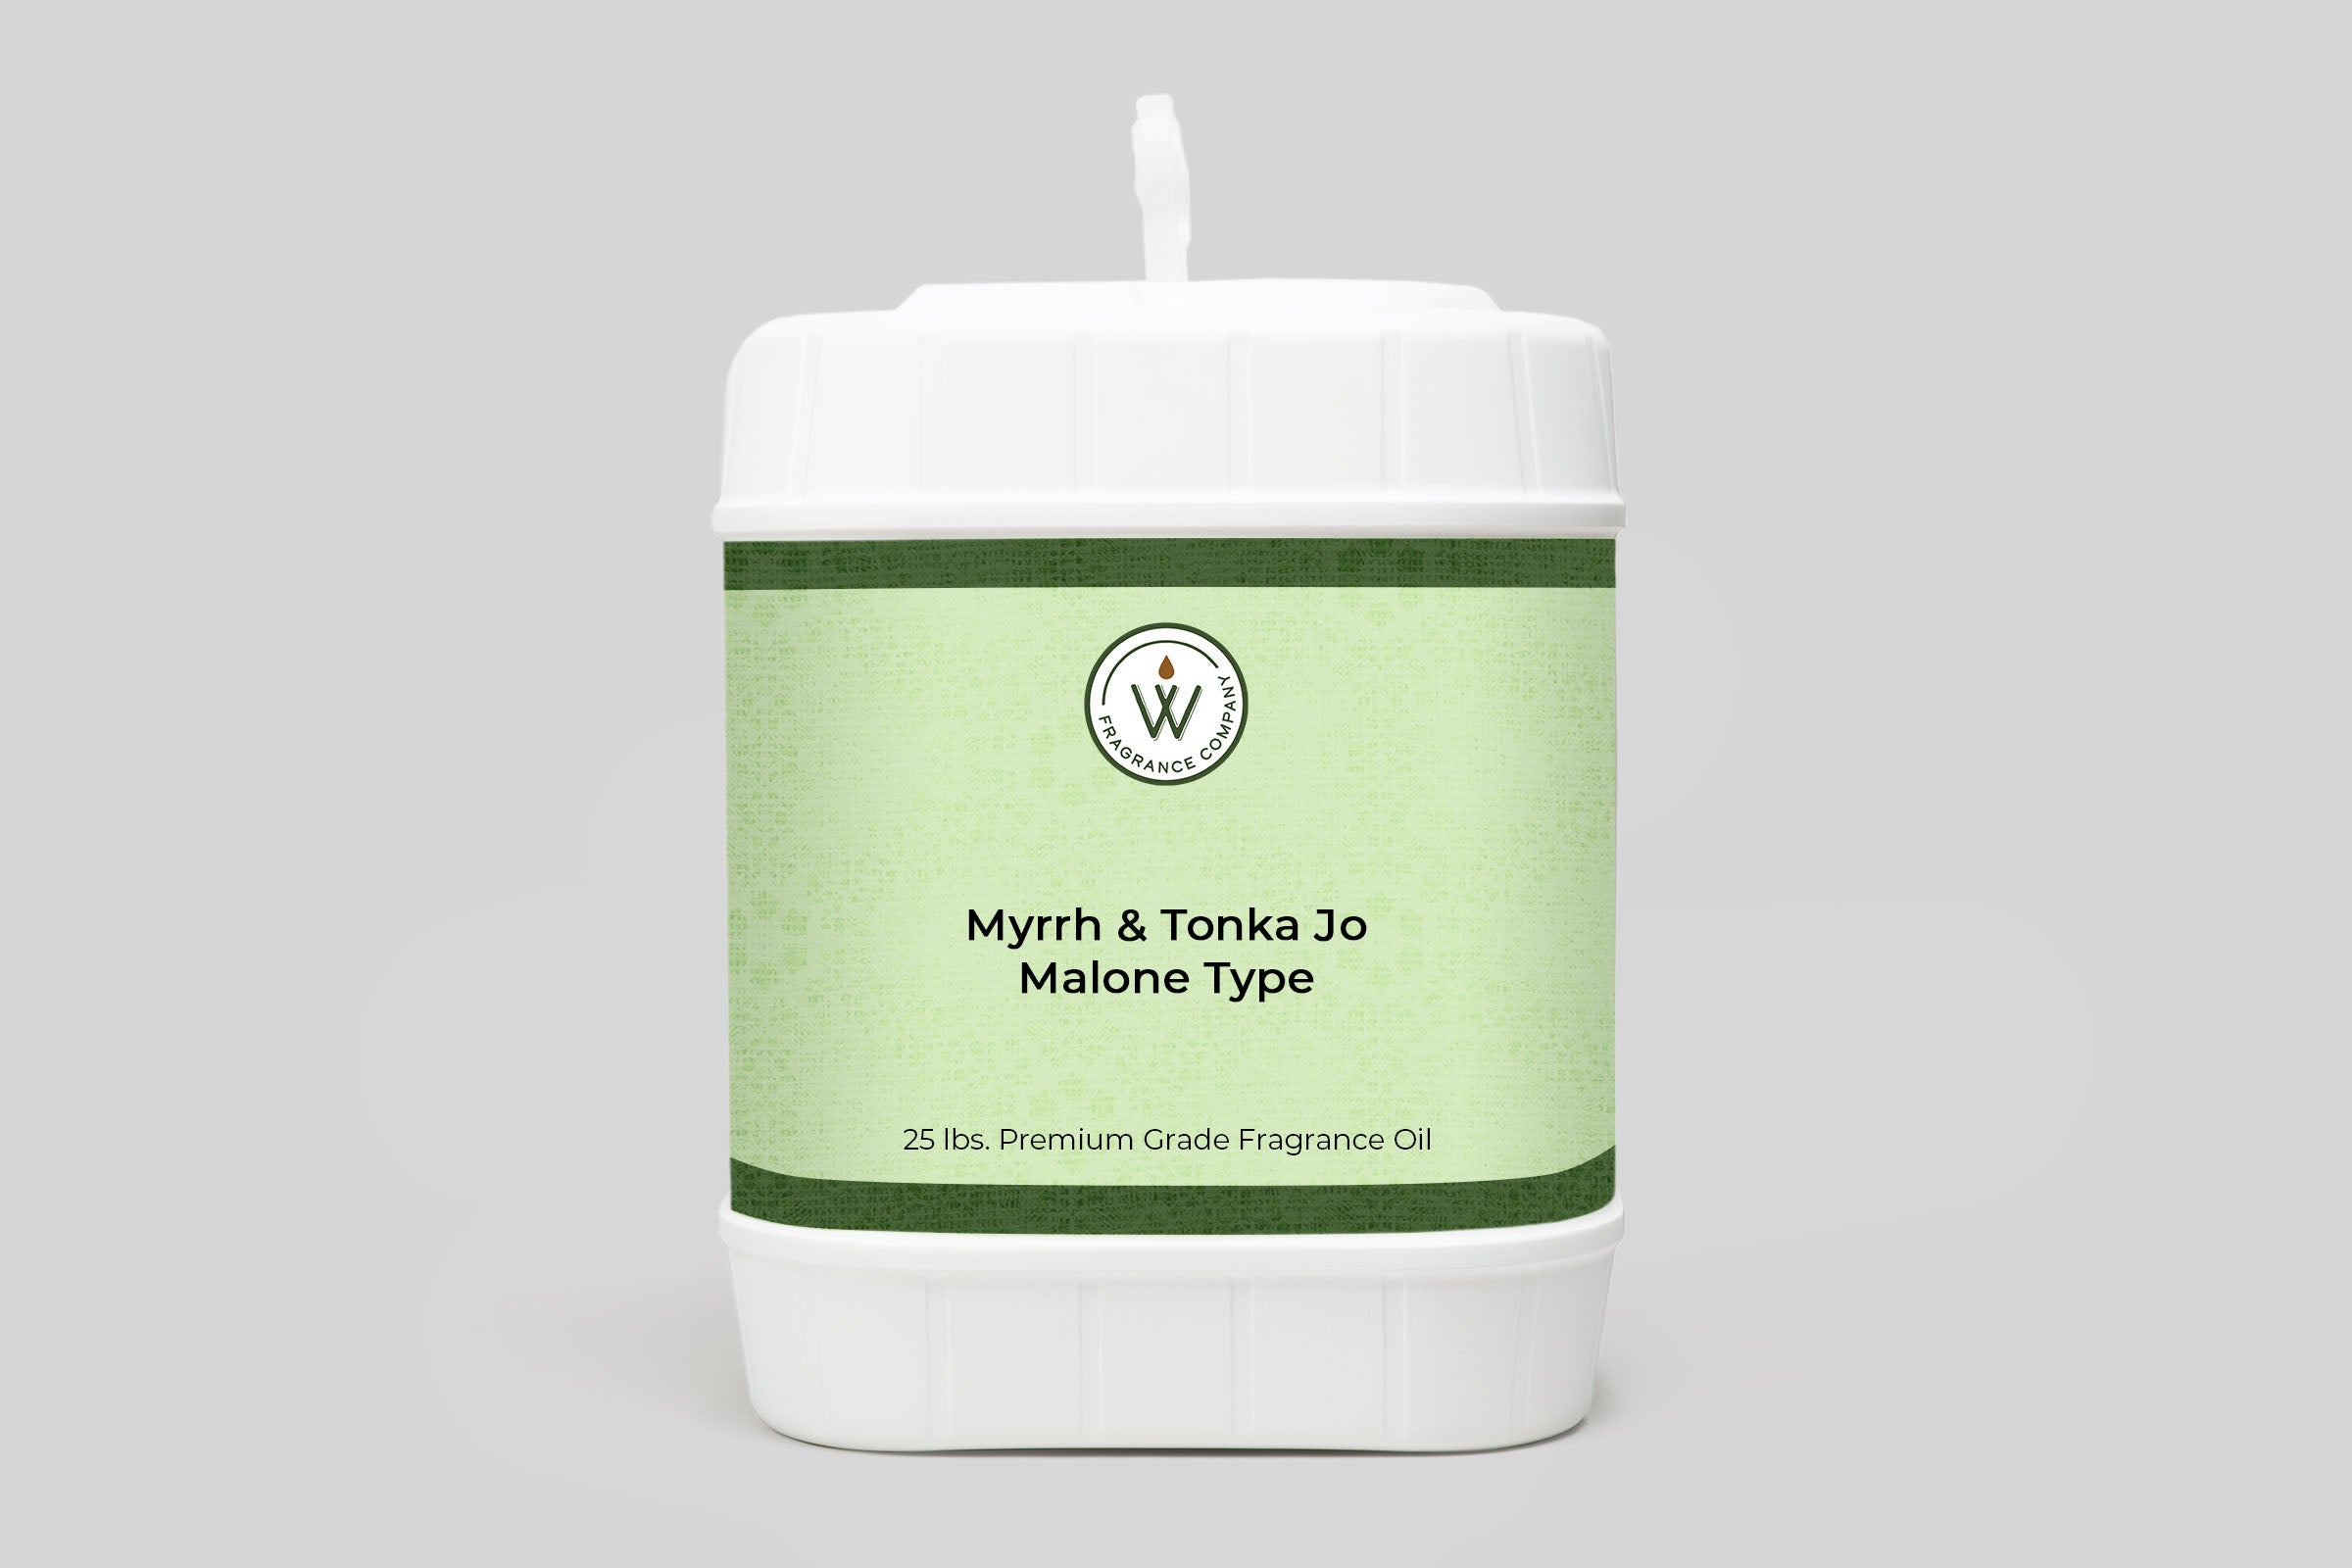 Myrrh & Tonka Jo Malone Type Fragrance Oil